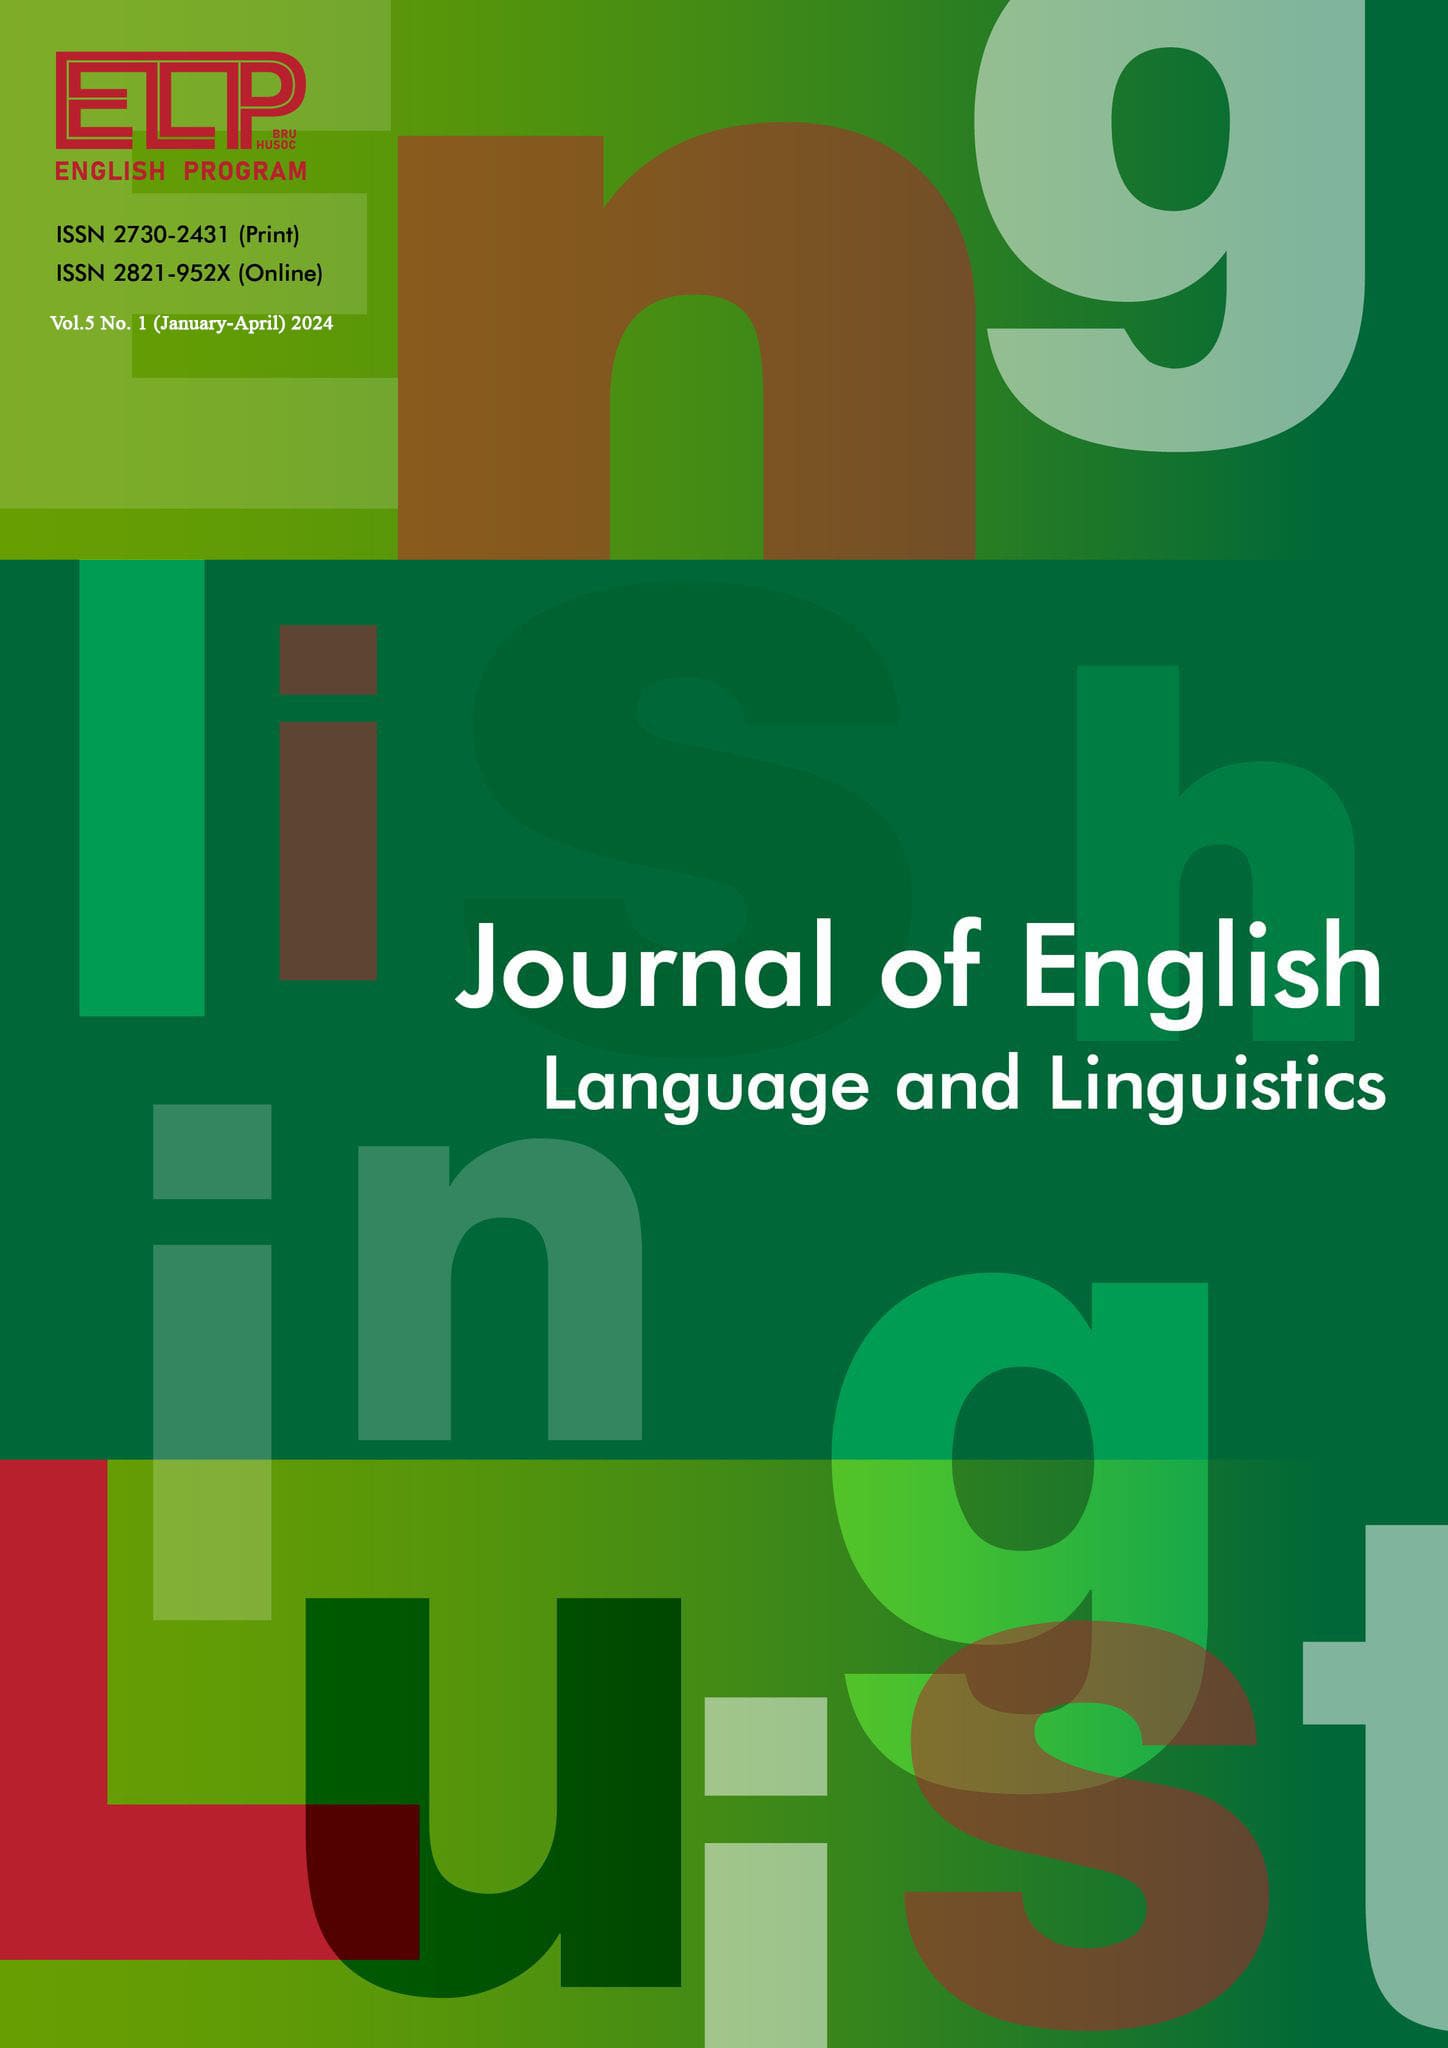 					View Vol. 5 No. 1 (2024):  Journal of English Language and Linguistics (JEL)
				